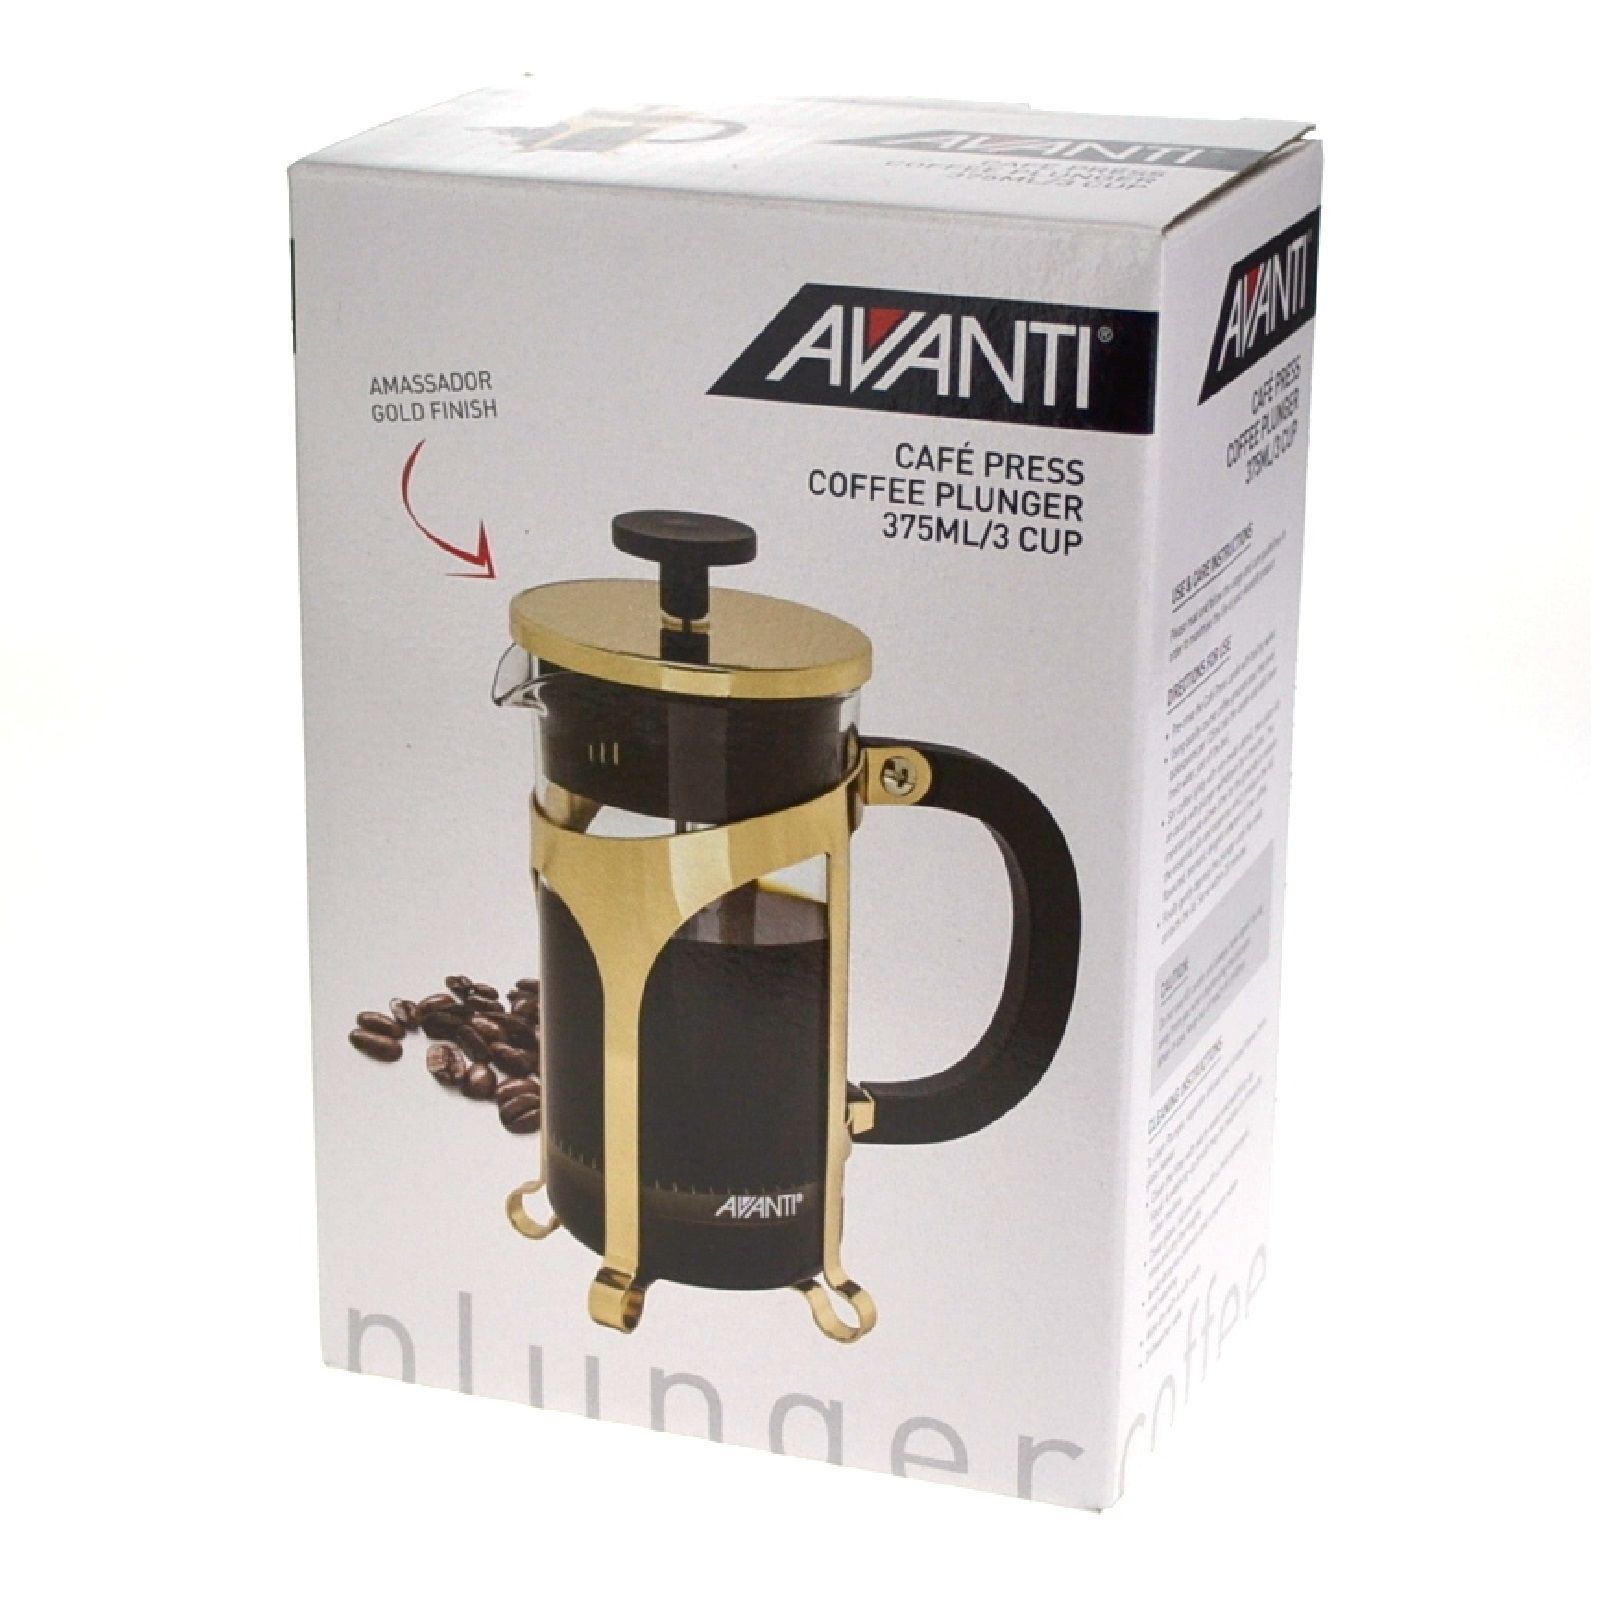 Buy Avanti 3 Cup Ambassador Coffee Plunger Online